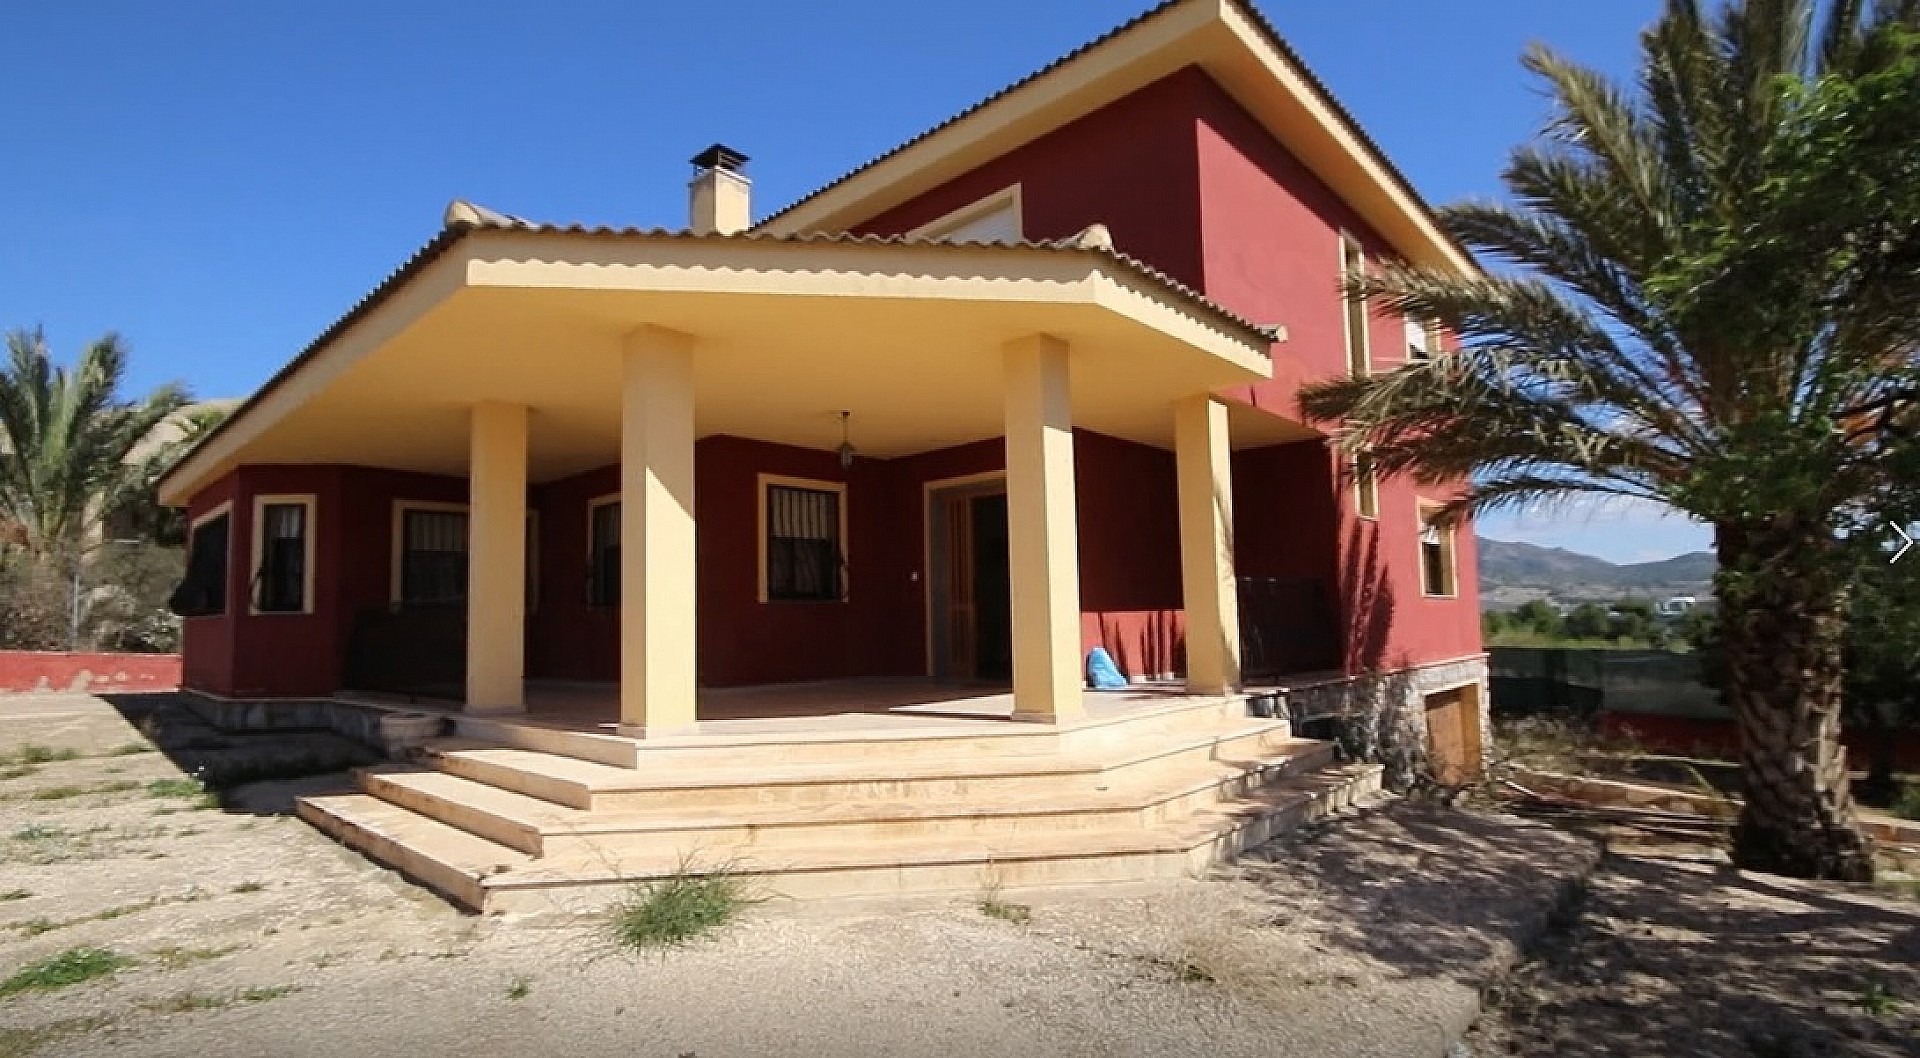 For sale: 5 bedroom house / villa in Salinas